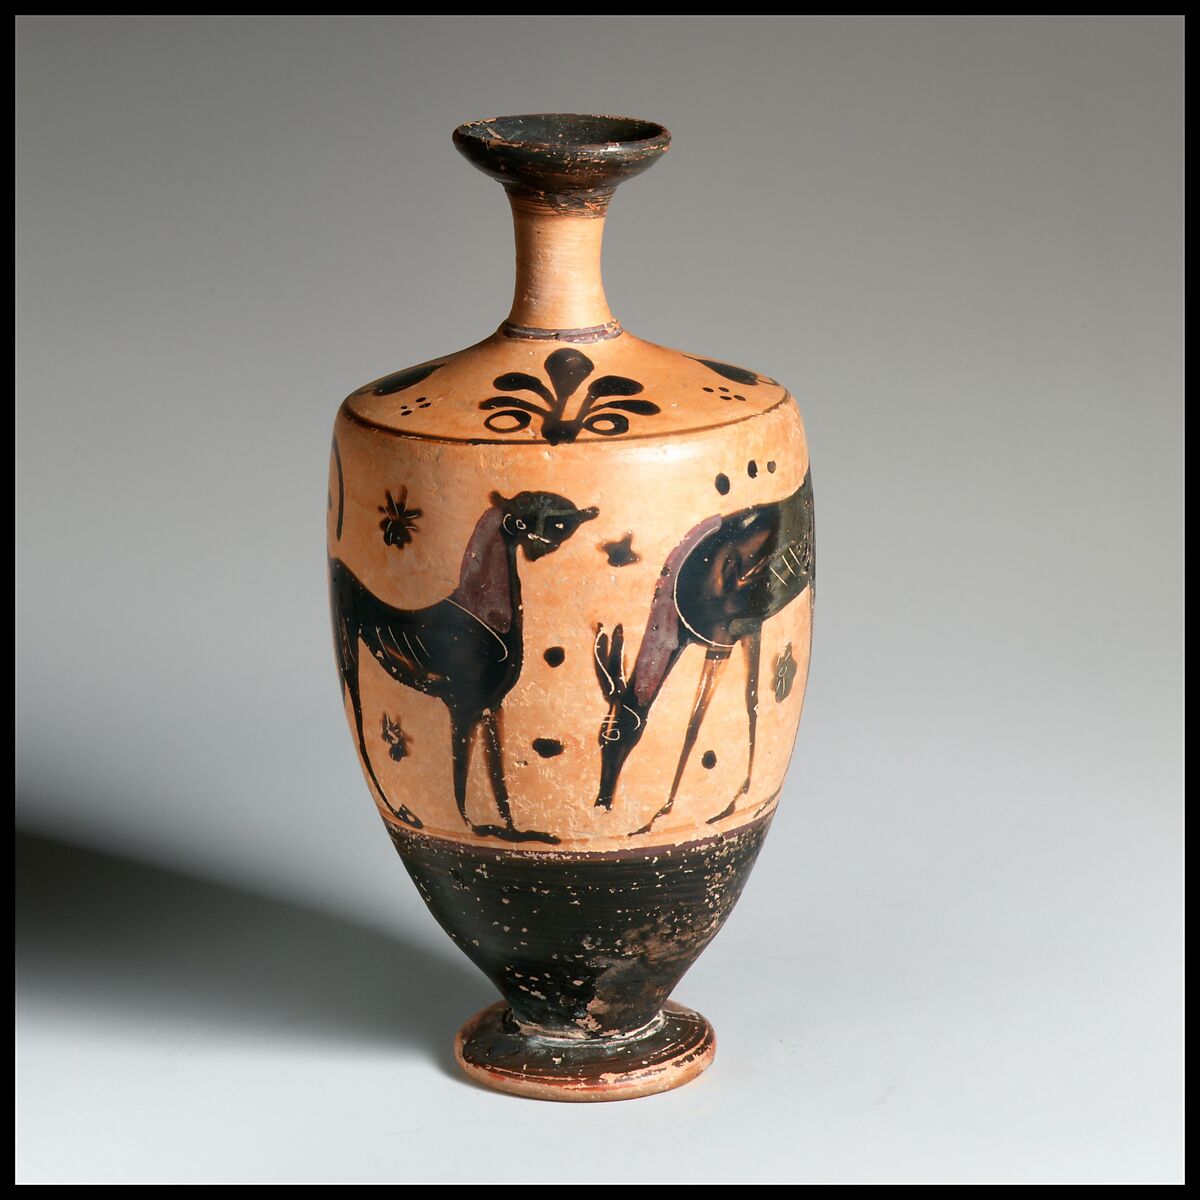 Lekythos, Terracotta, Greek, Attic